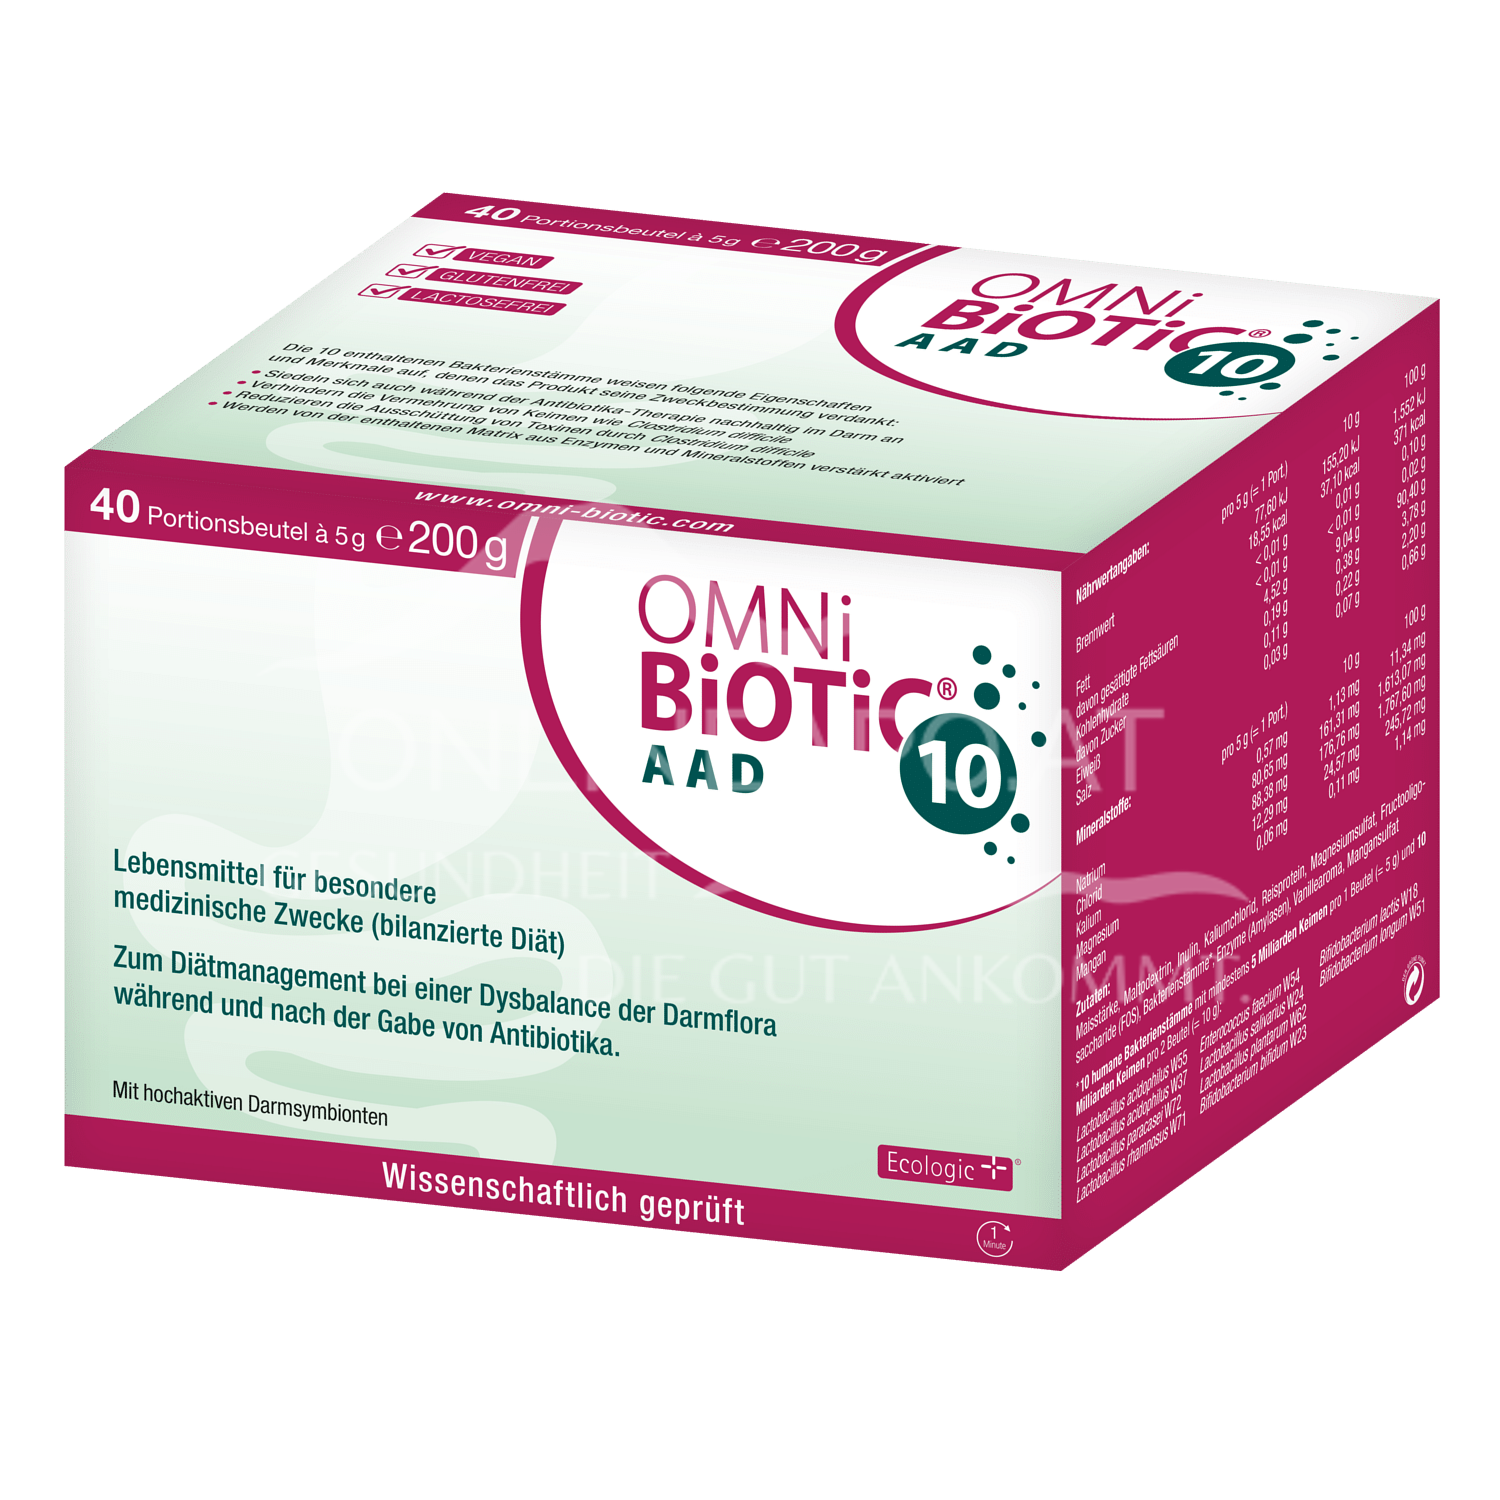 OMNi-BiOTiC® 10 AAD 5g